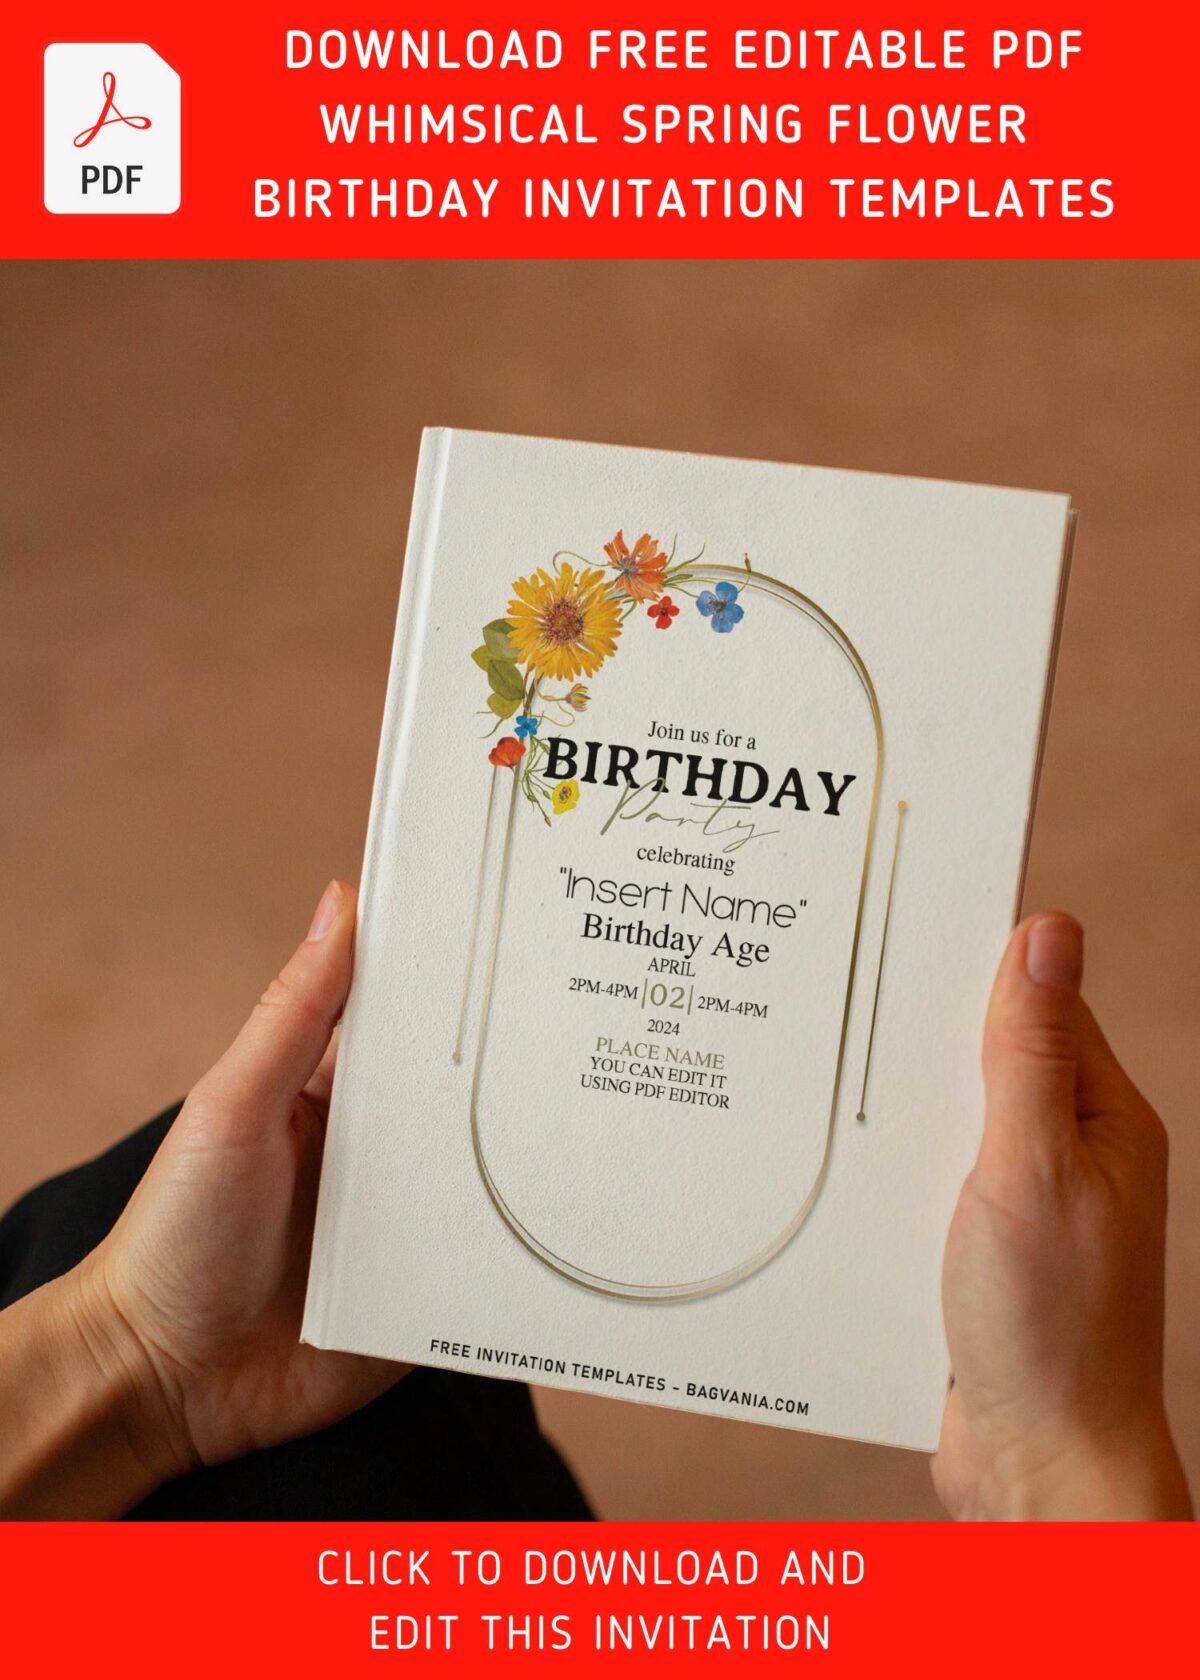 (Free Editable PDF) Whimsical Spring Birthday Invitation Templates with editable text